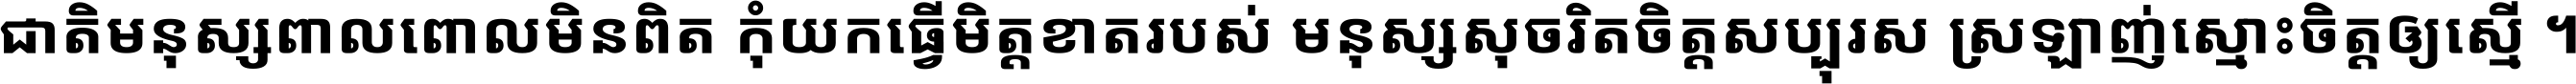 Noto Sans Khmer UI Bold